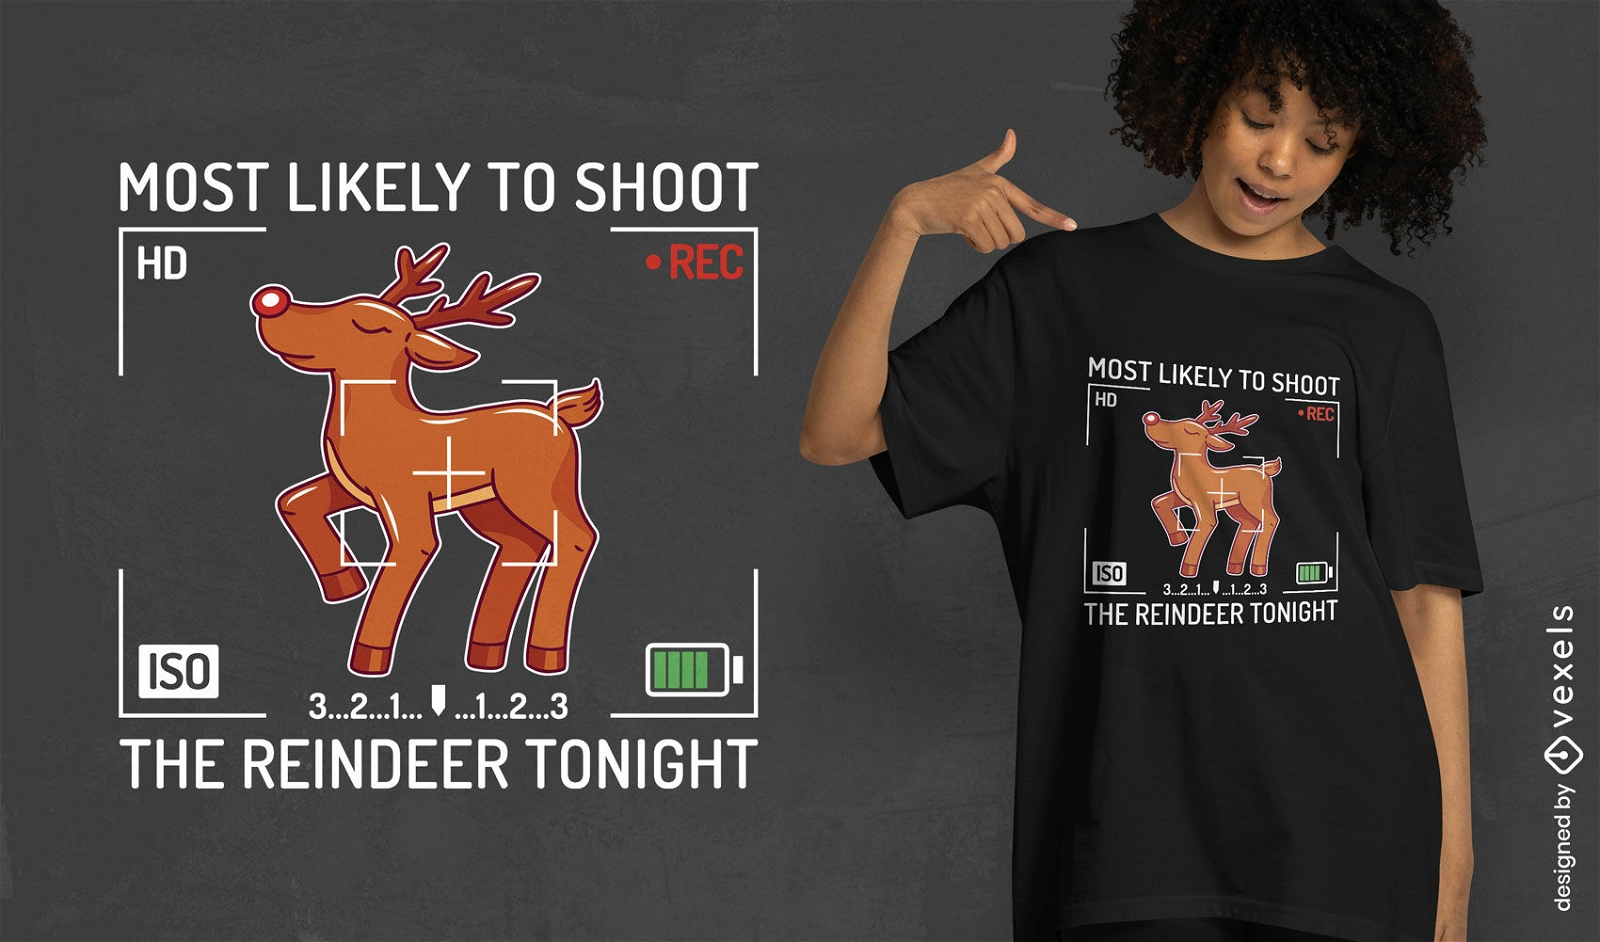 Dise?o de camiseta de fotograf?a de renos.